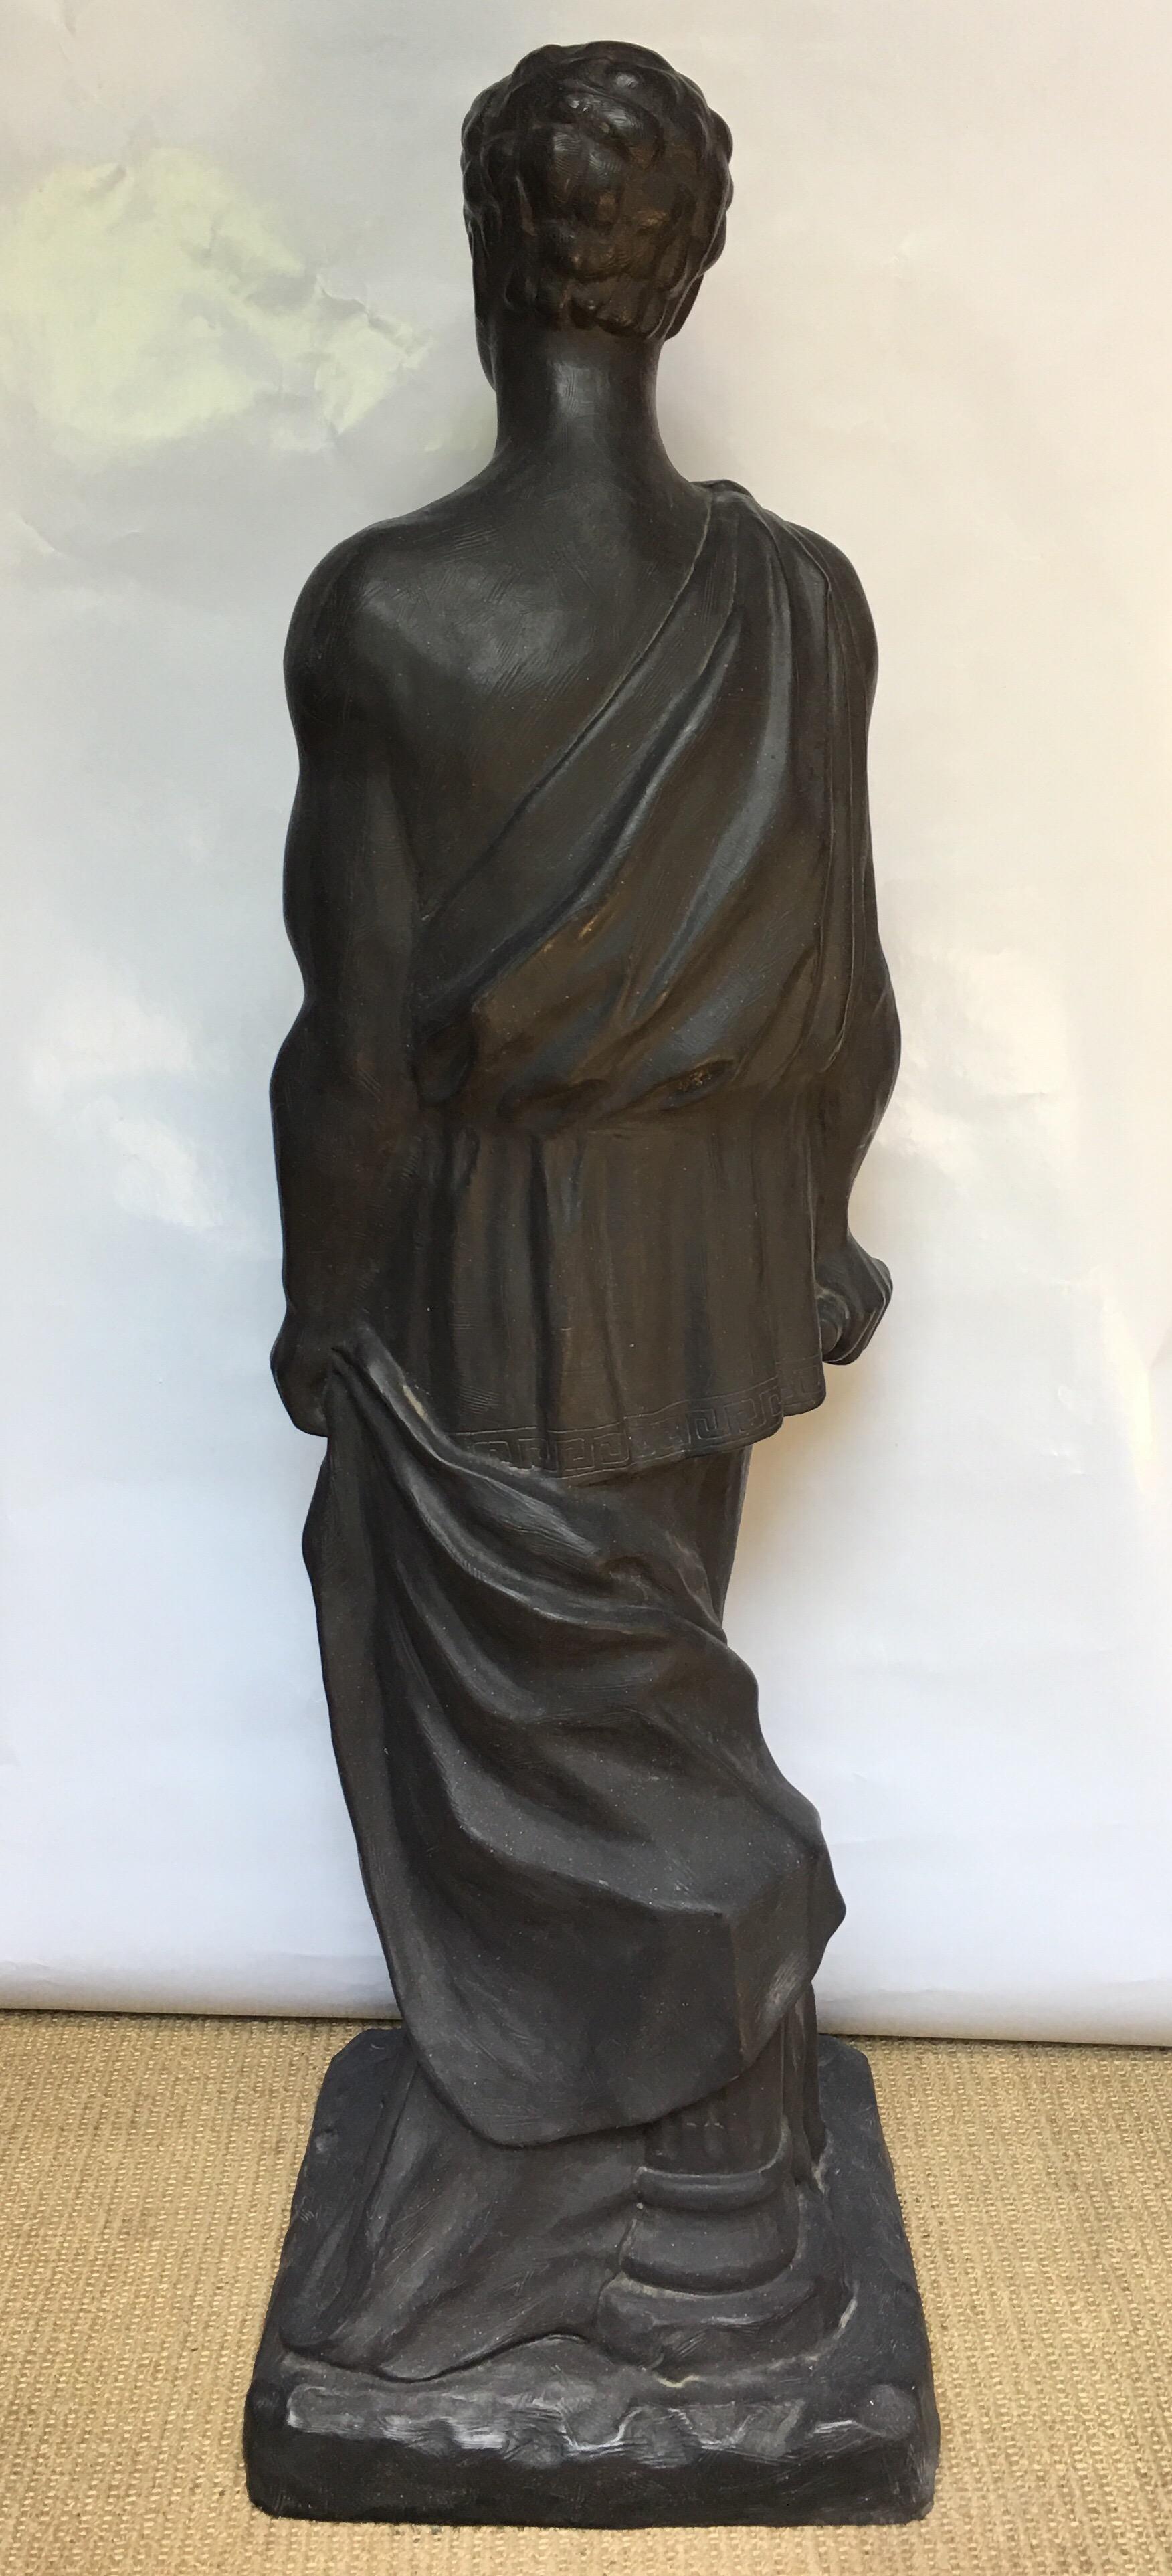 Late 20th Century Neoclassical Draped Roman Male Sculpture Figure with Greek Key Motif